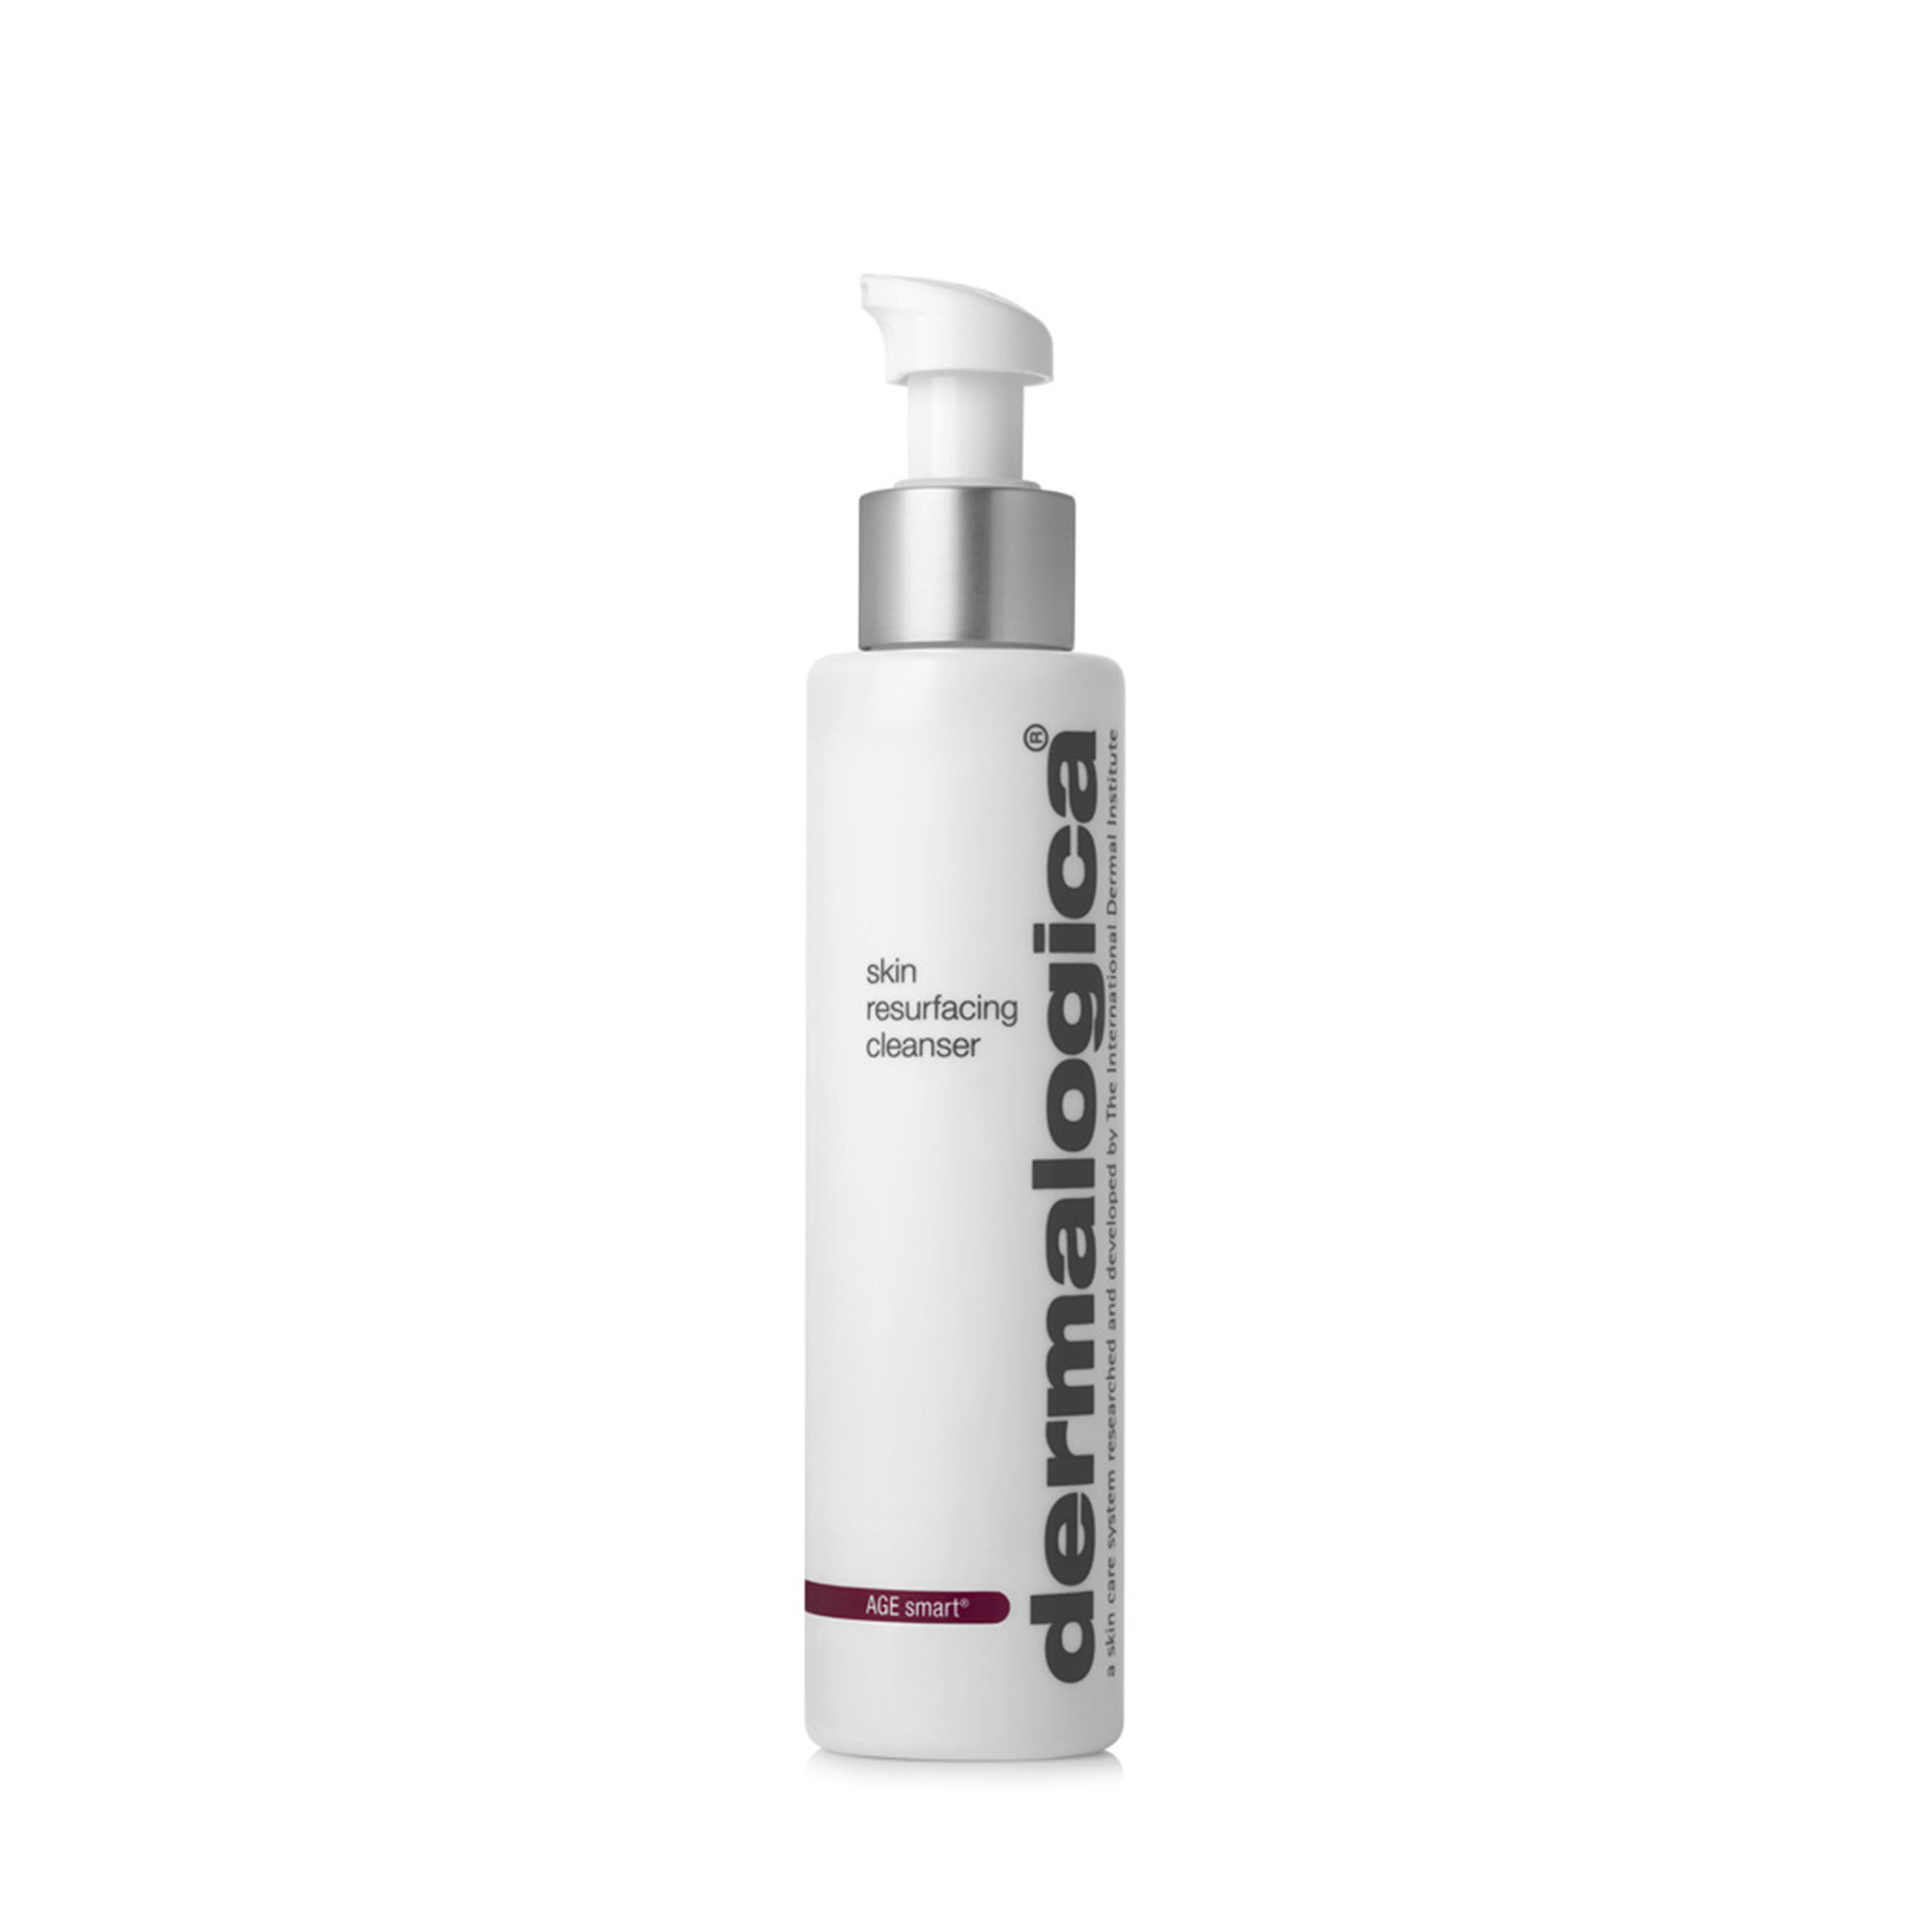 Dermalogica Dermalogica Очищающее и шлифующее средство для лица AGE Smart Skin Resurfacing Cleanser 150 мл от Foambox